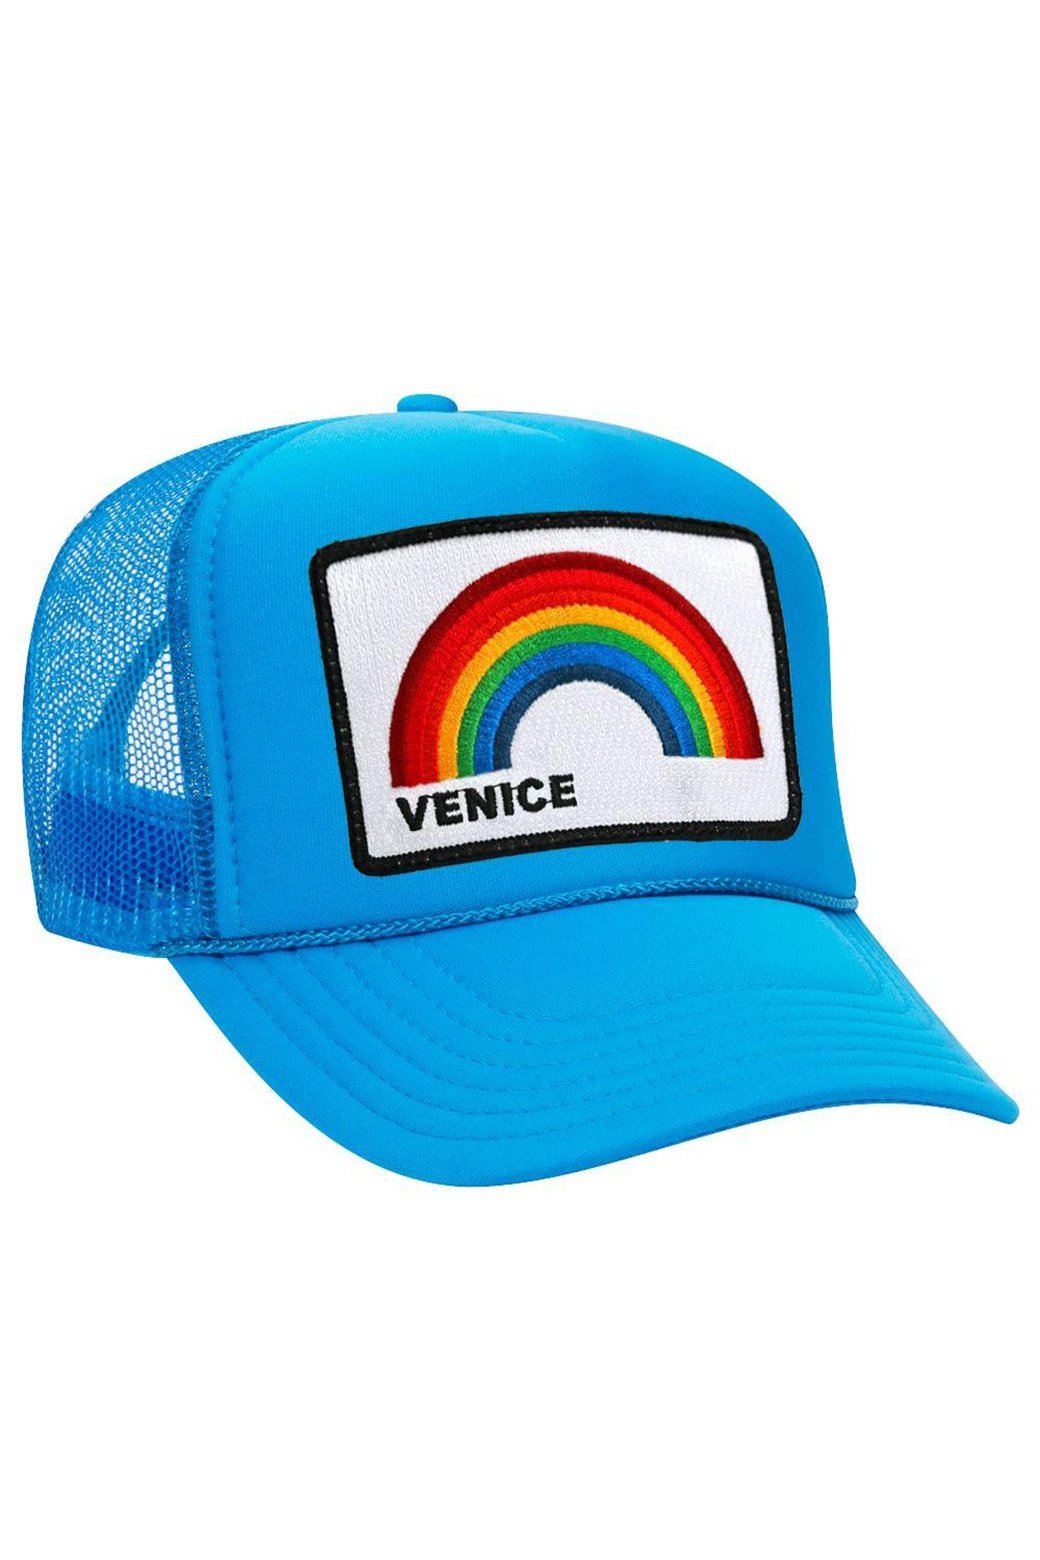 VENICE RAINBOW TRUCKER HAT HATS Aviator Nation OS NEON BLUE 